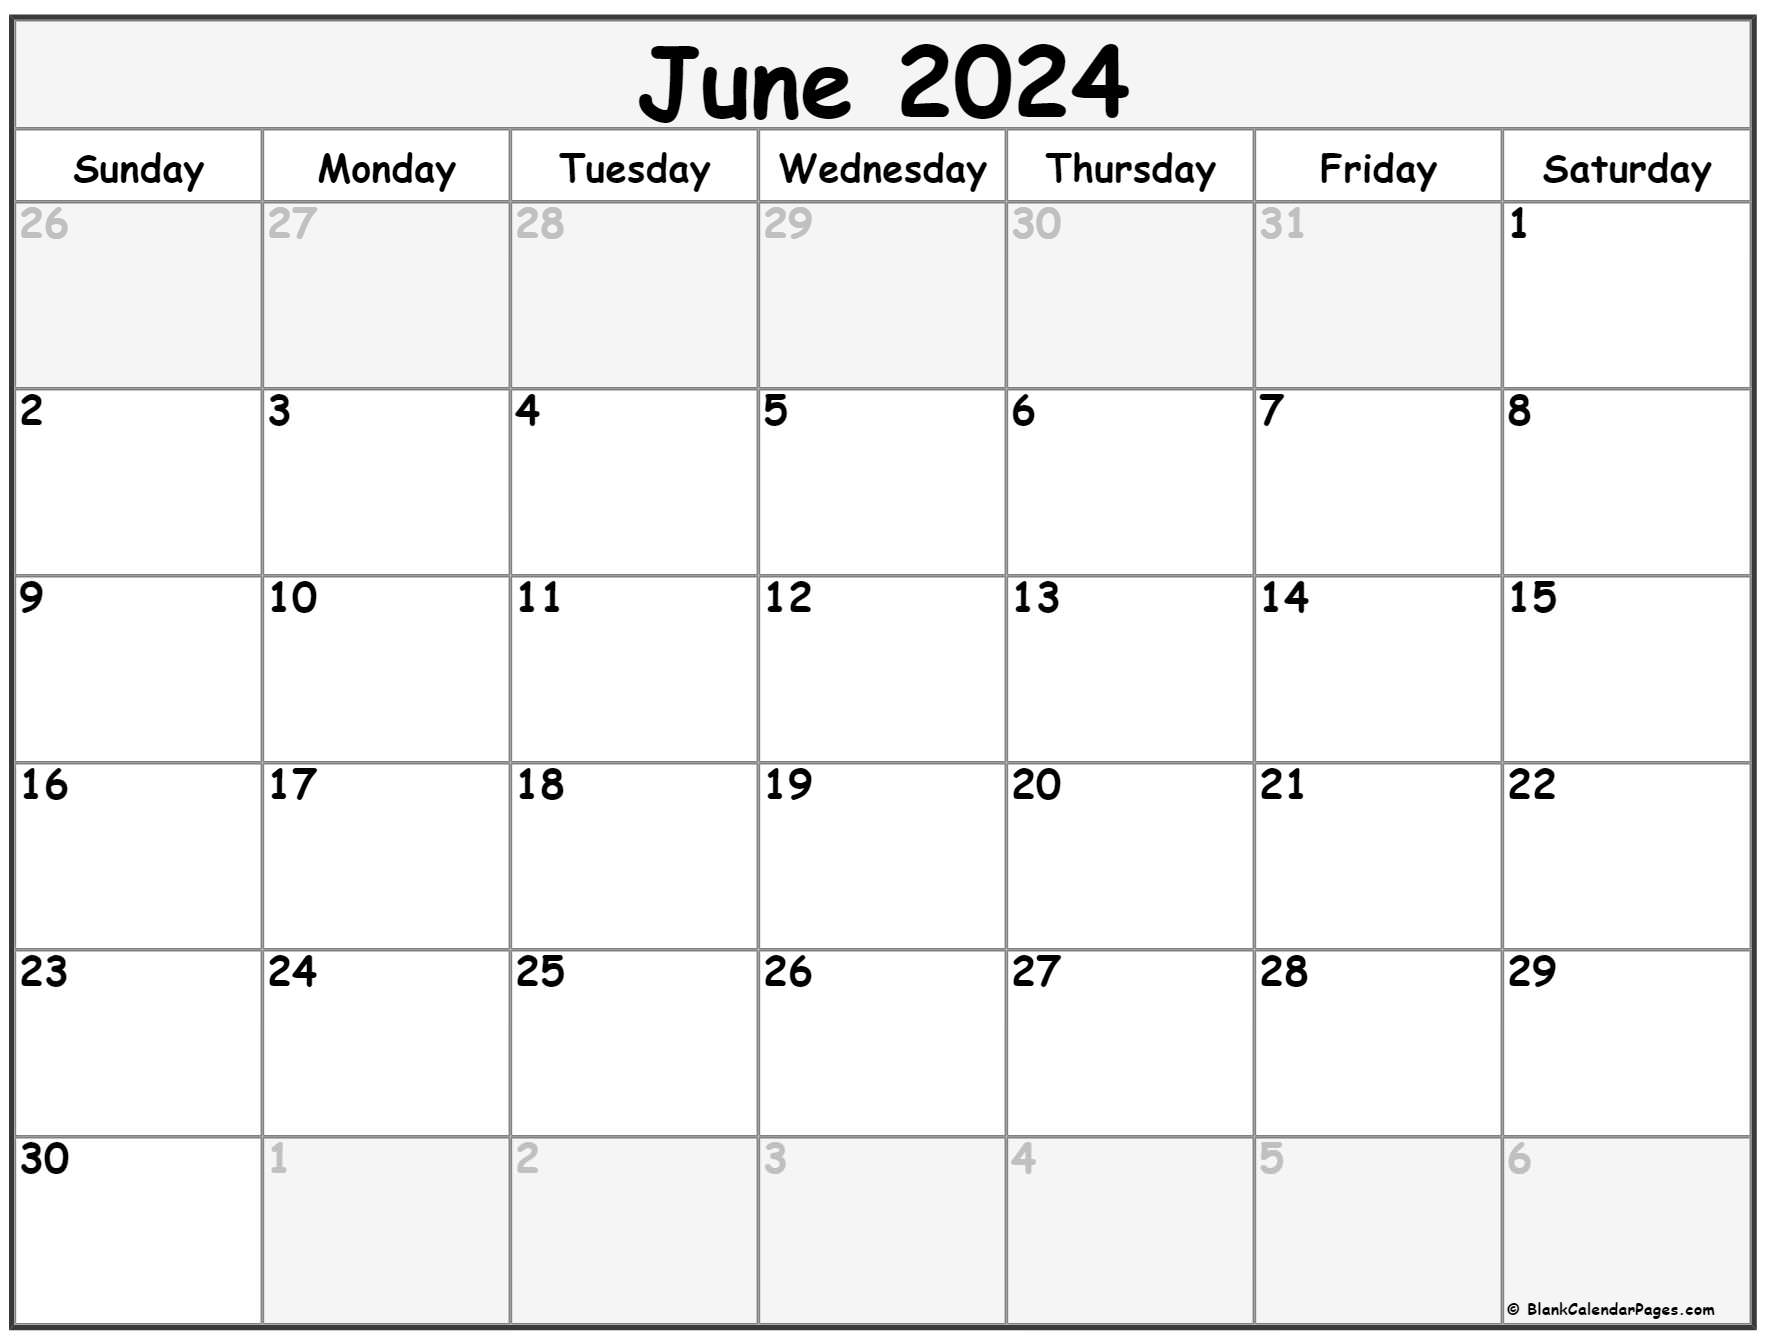 June 2024 Calendar | Free Printable Calendar for Free Printable June 2024 Calendar